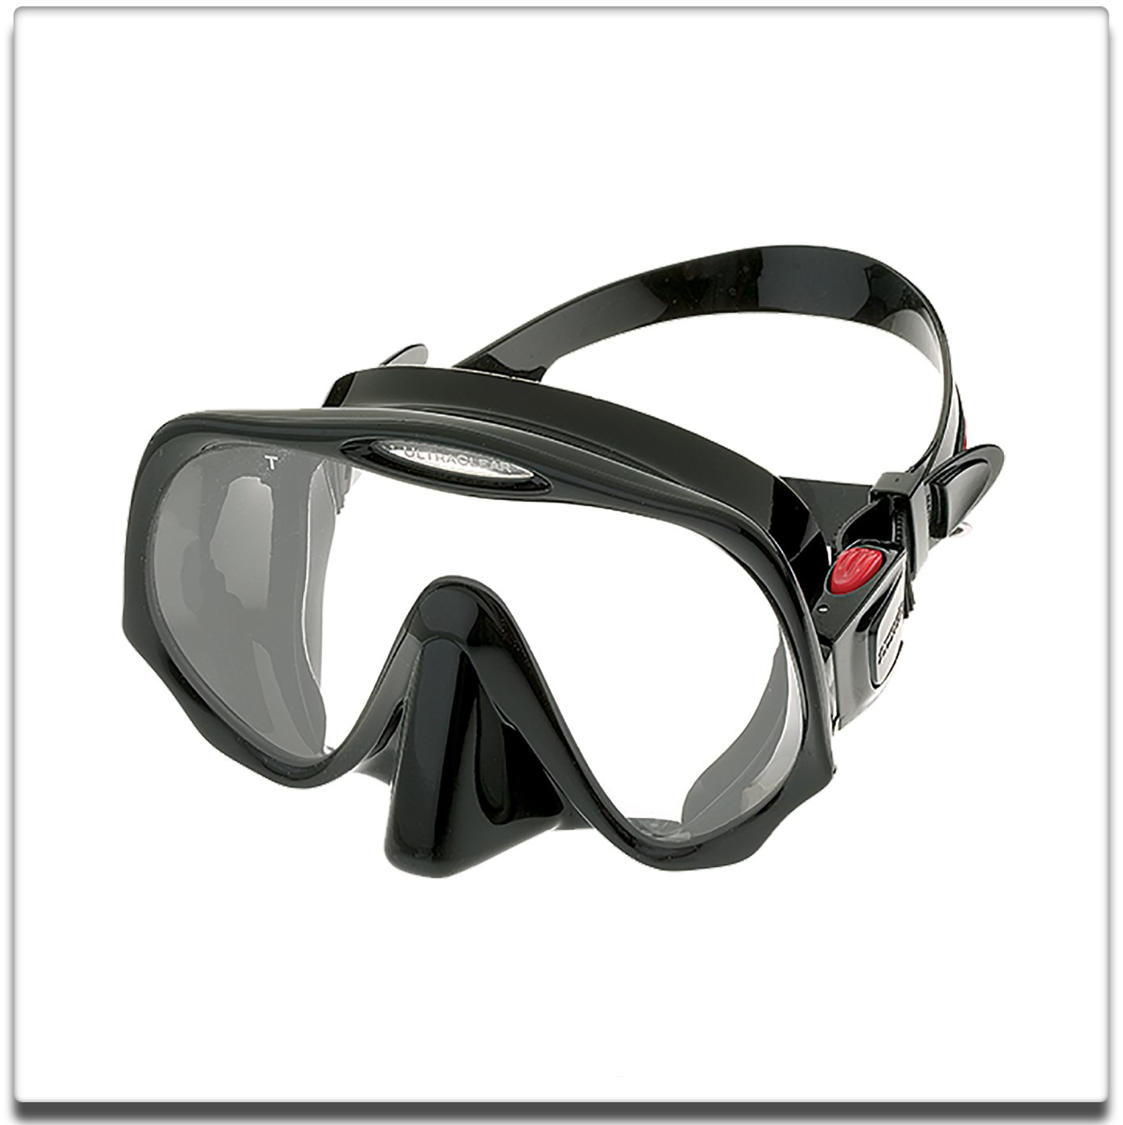 Masks- wetsuit, diver, sharkskin, snorkeling gear, watersports equipment, diving fins, snorkeling mask, ocean reef, Garmin G1